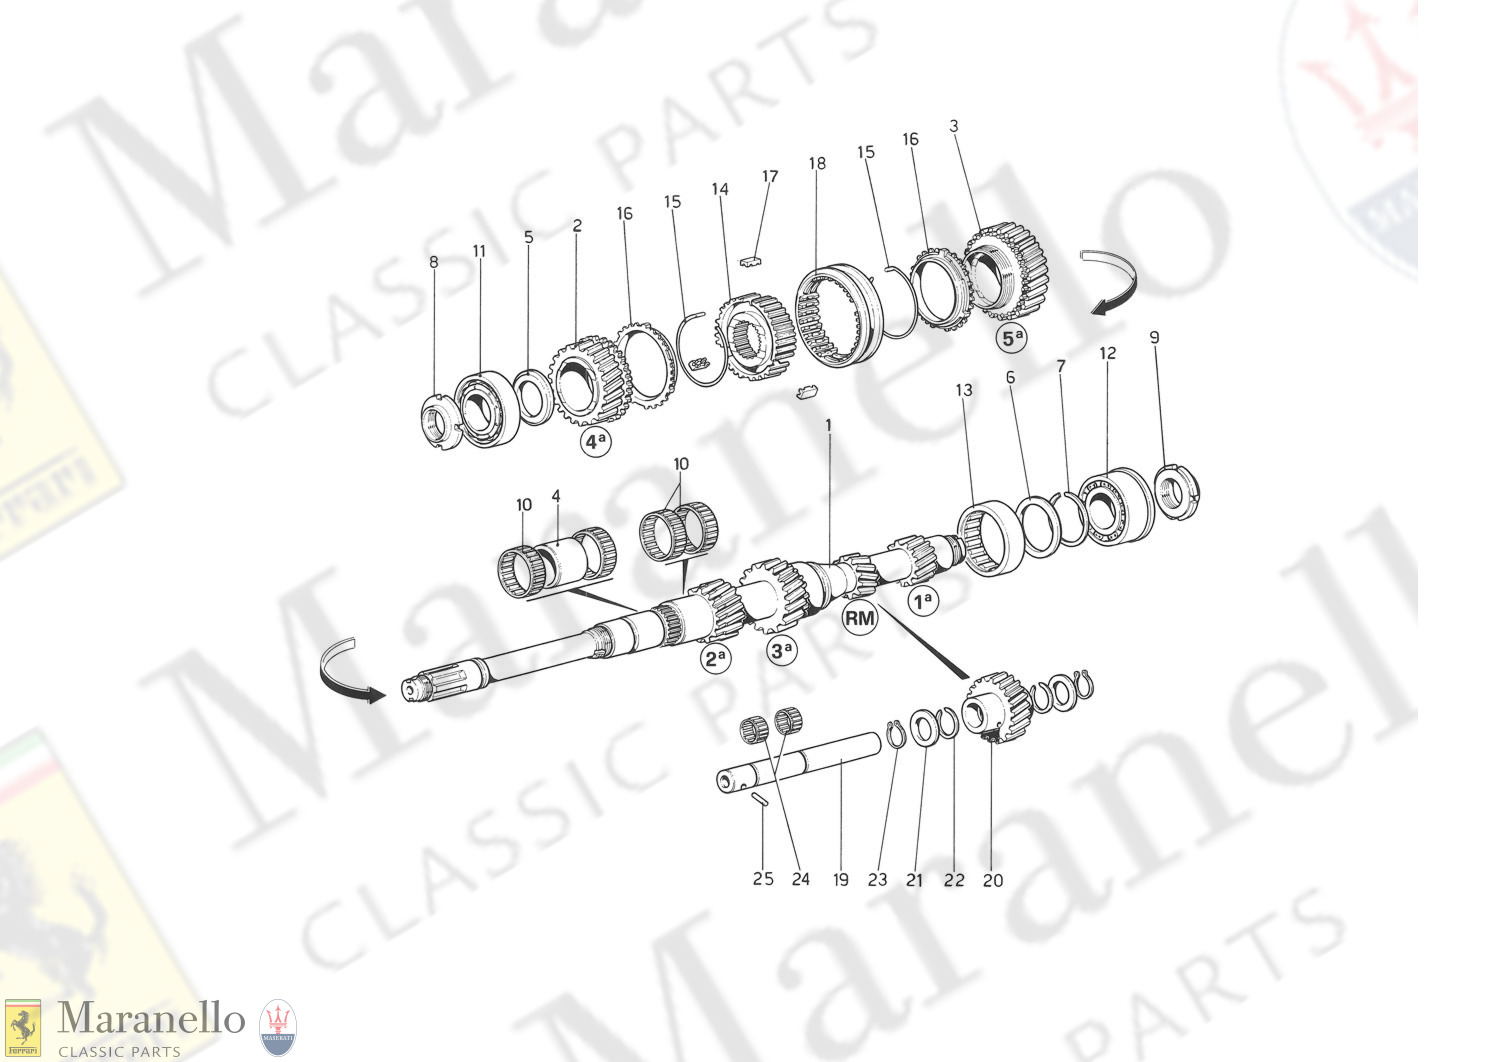 022 - Main Shaft Gears